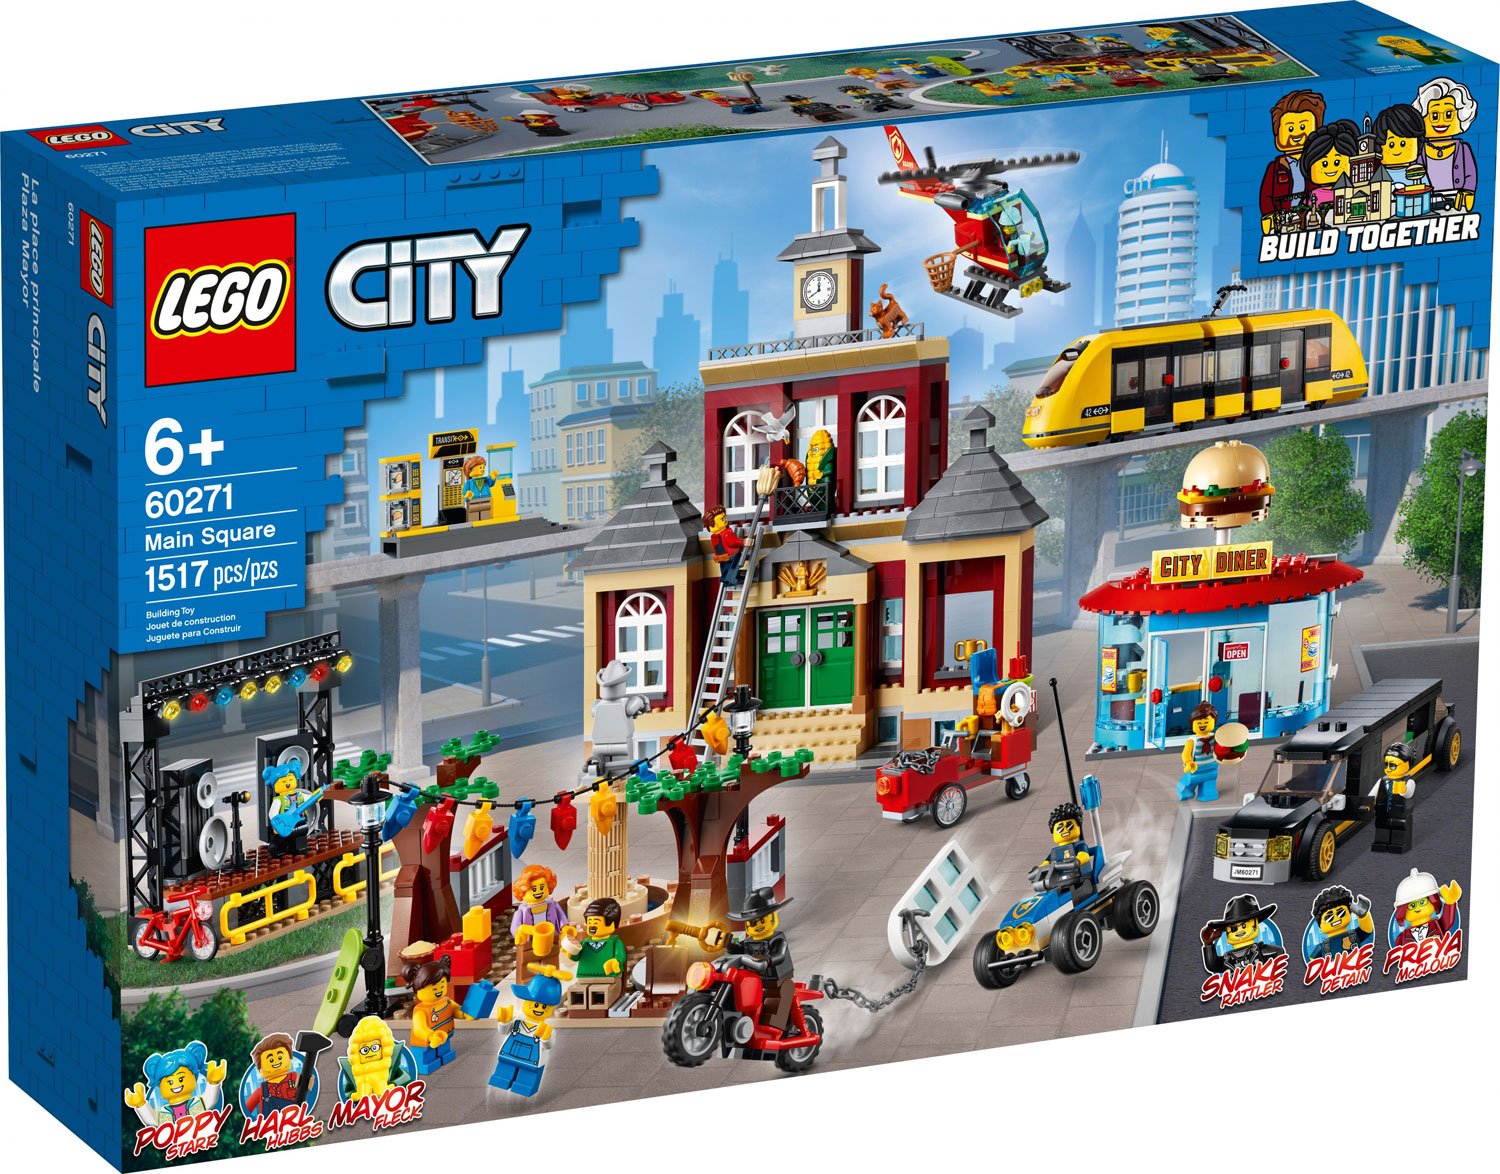 LEGO City 2020 - Rumors, Speculation 